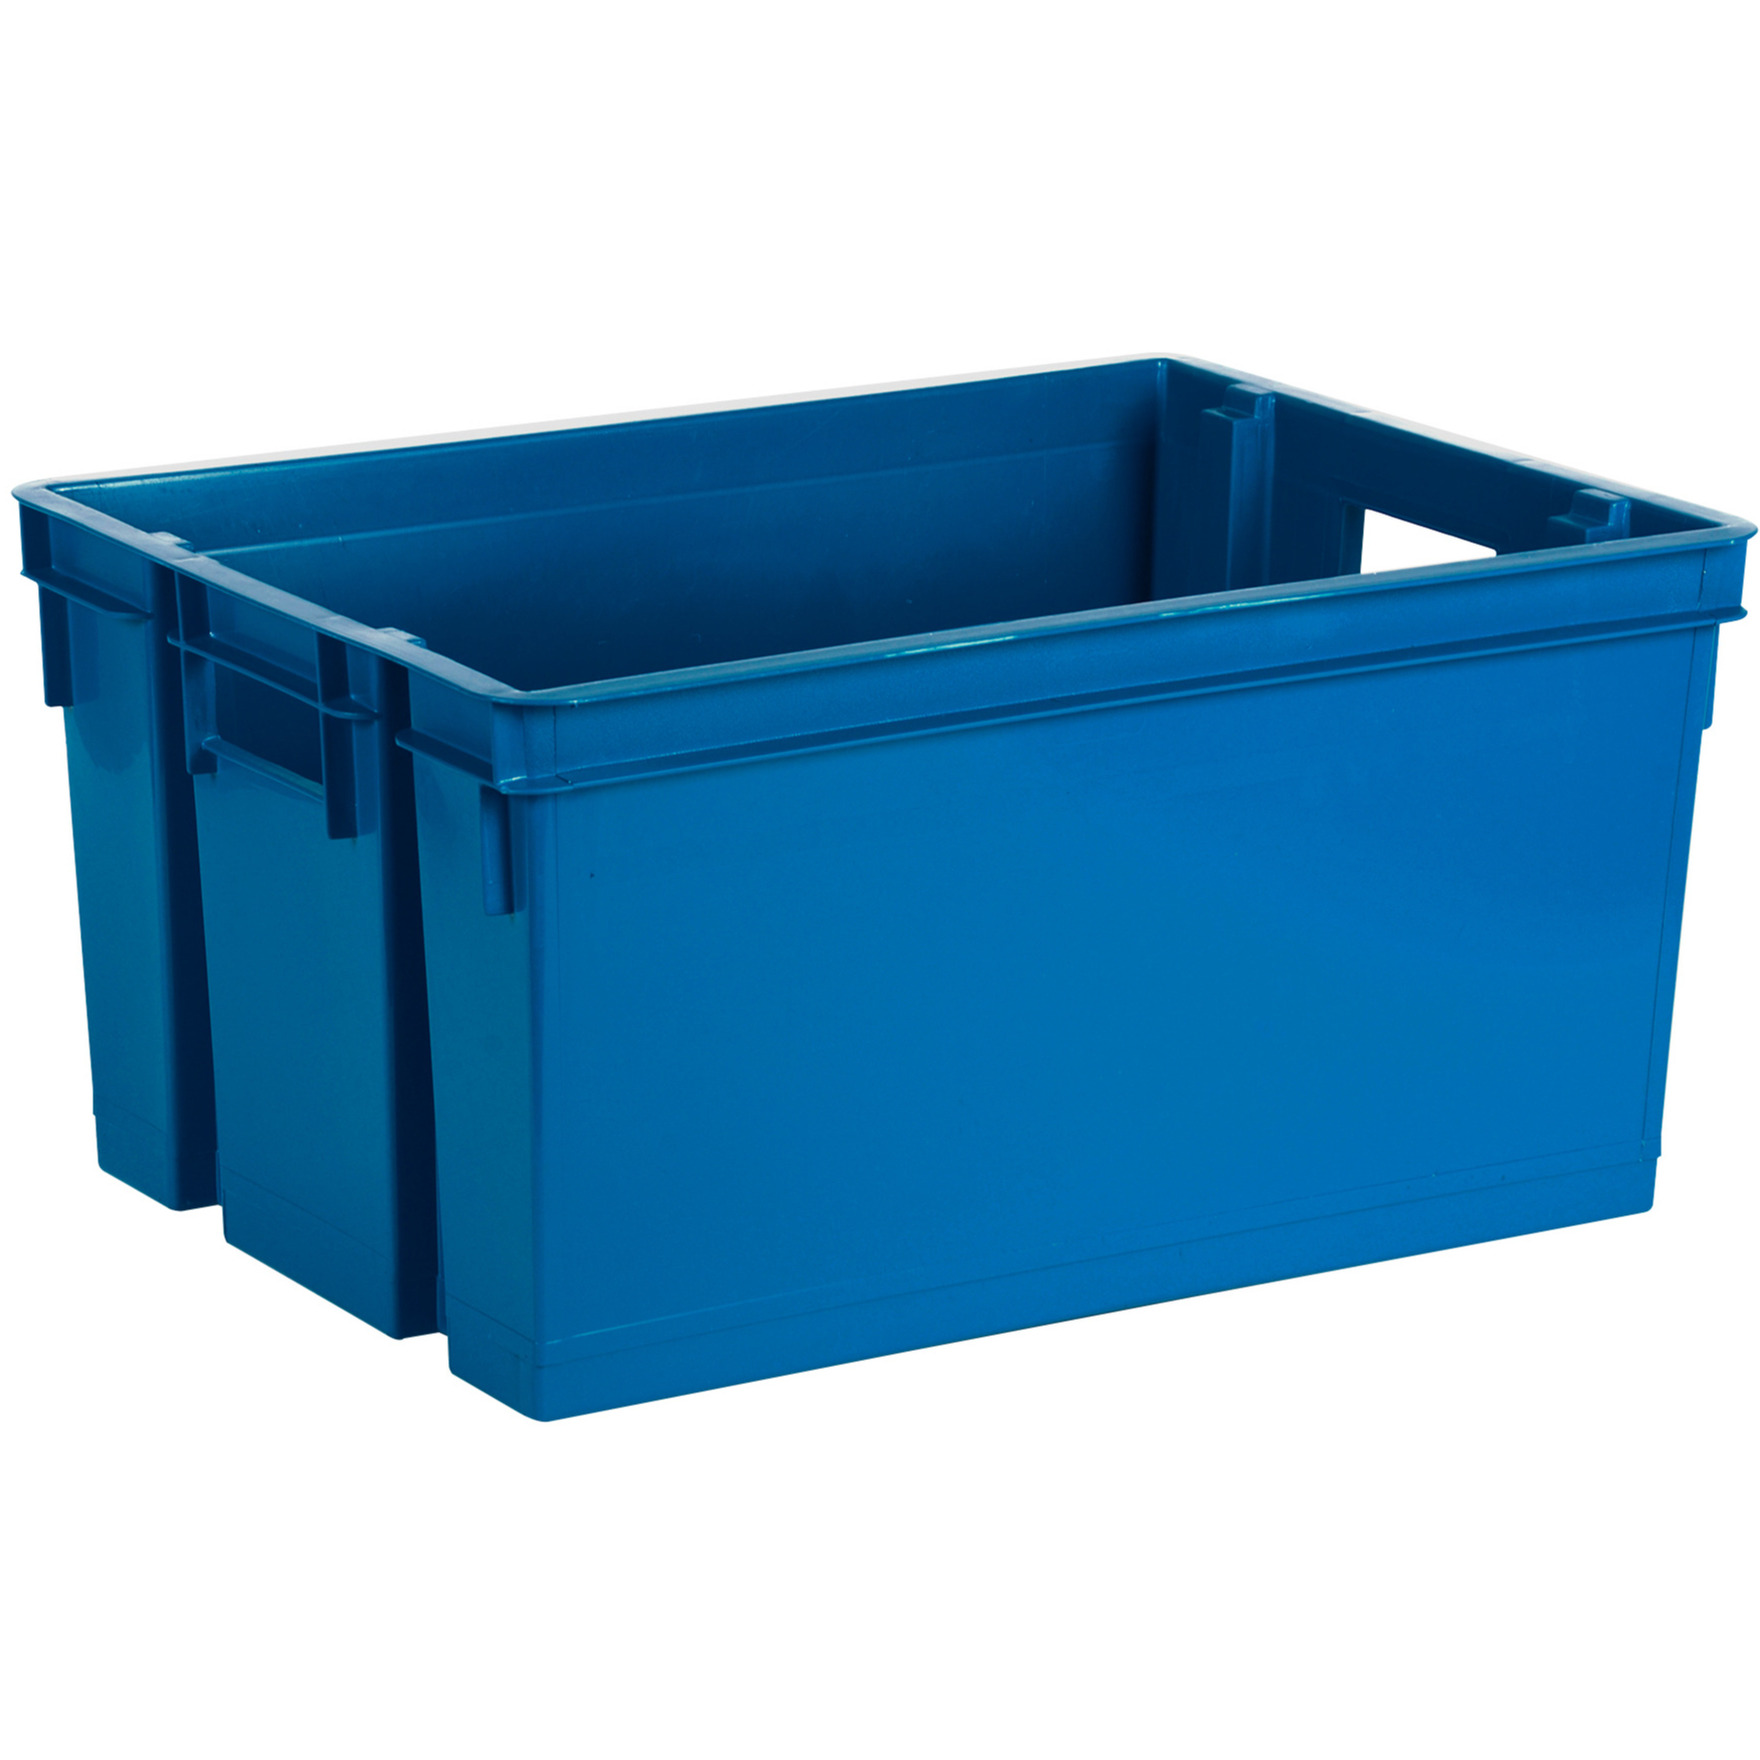 Opbergbox-opbergkrat 50 L blauw kunststof 56 x 41 x 29 cm stapelbaar-nestbaar